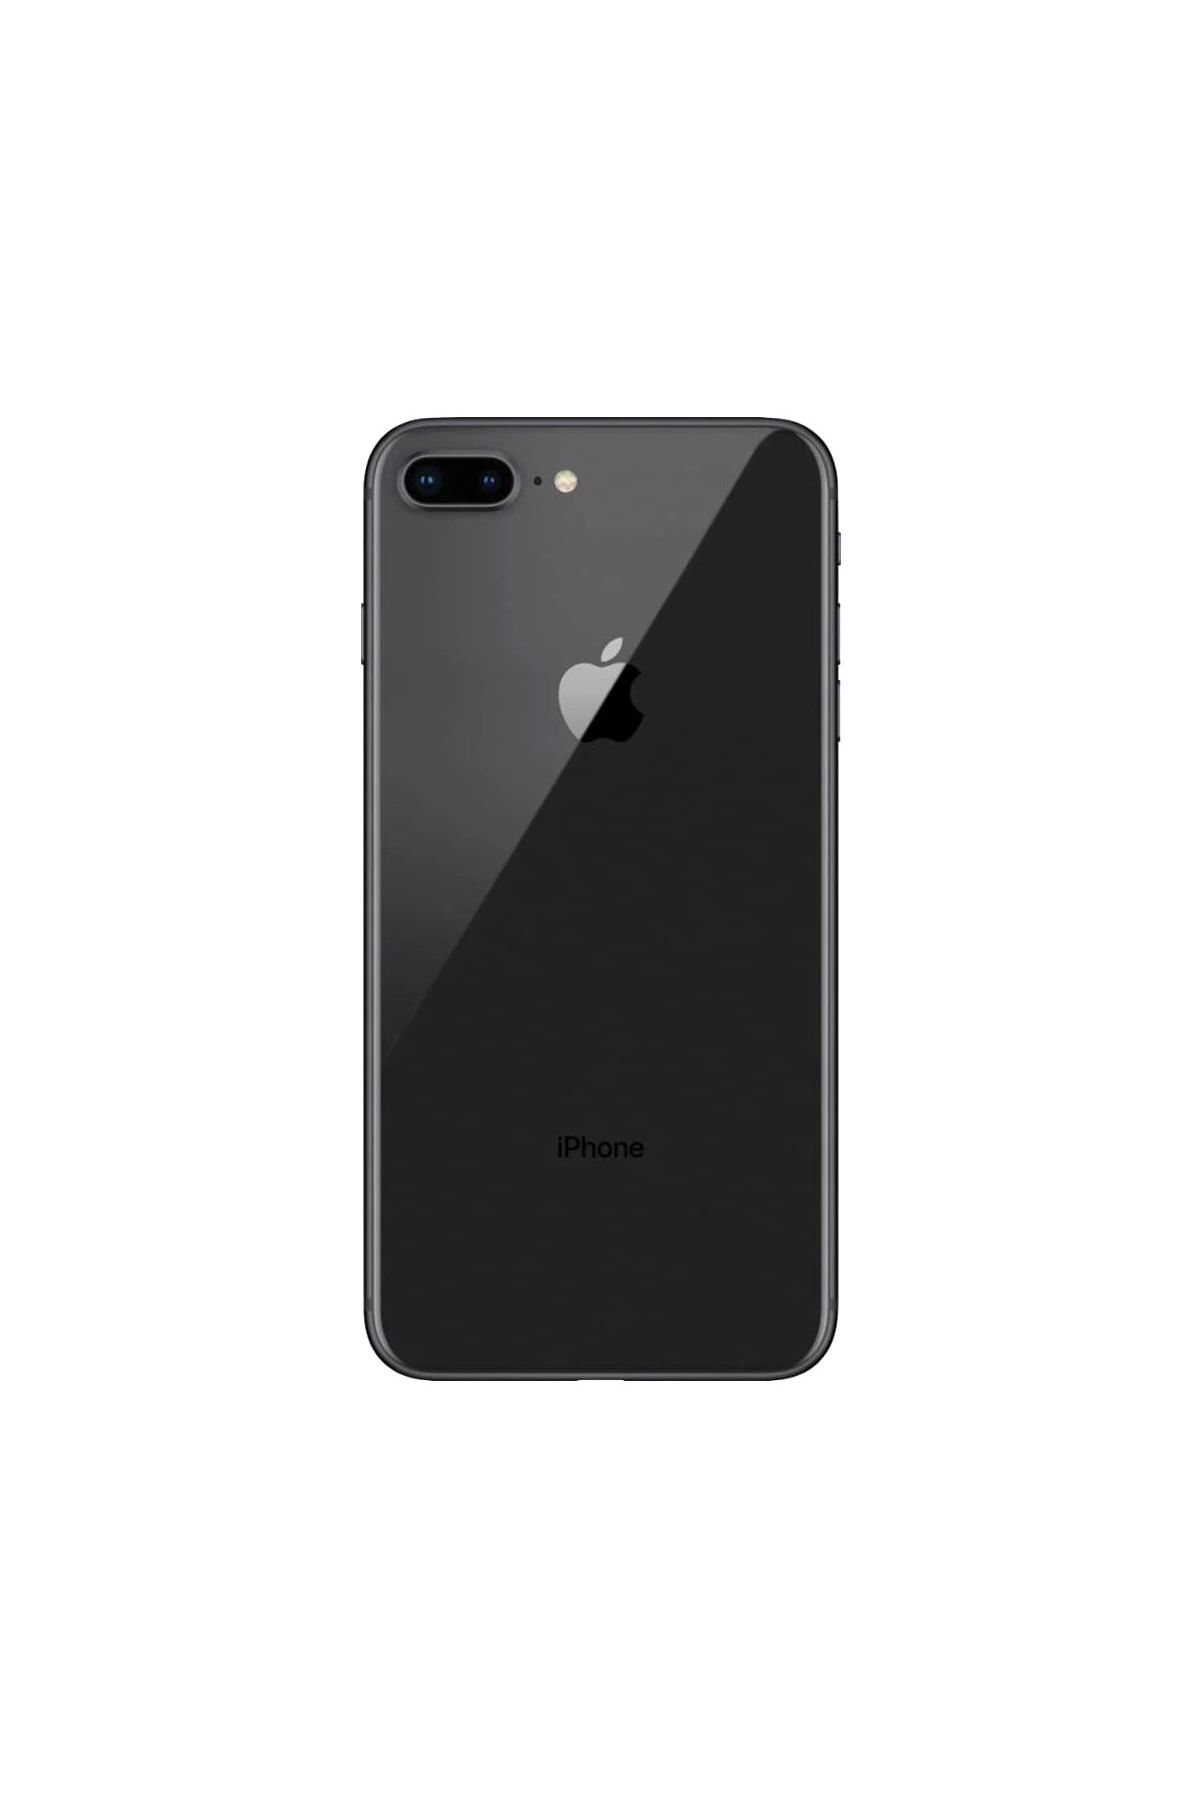 Apple Yenilenmiş iPhone 8 Plus 128 GB Siyah Cep Telefonu (12 Ay Garantili) - A Kalite